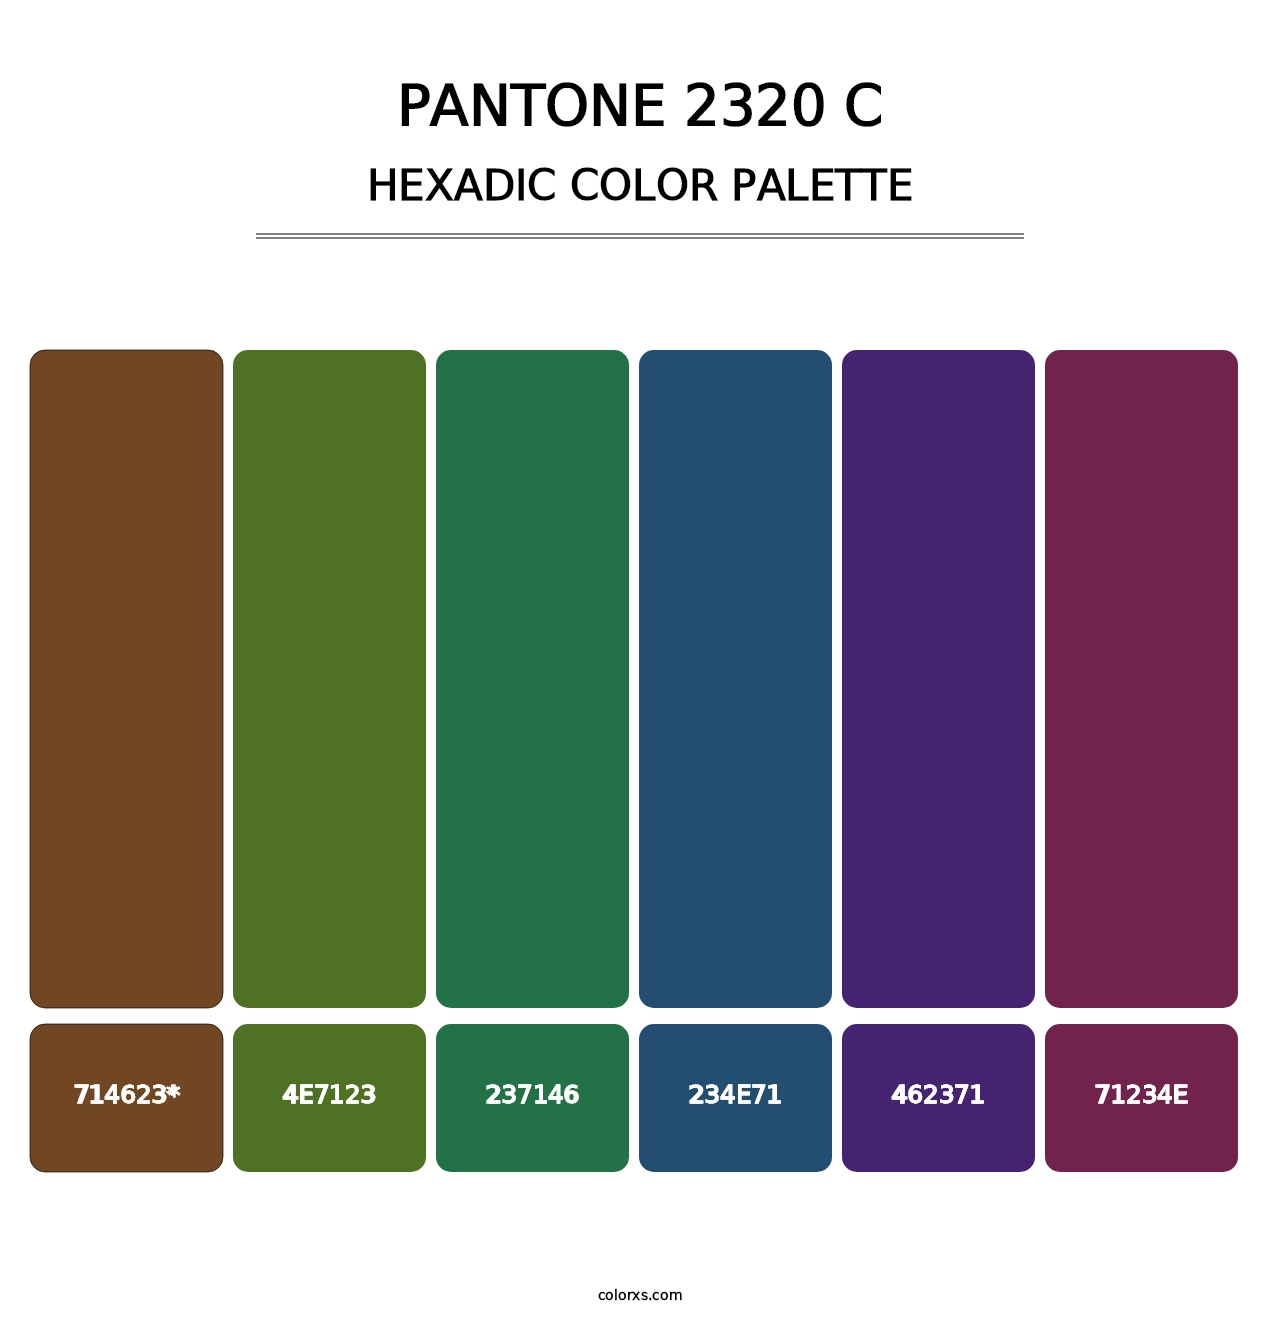 PANTONE 2320 C - Hexadic Color Palette